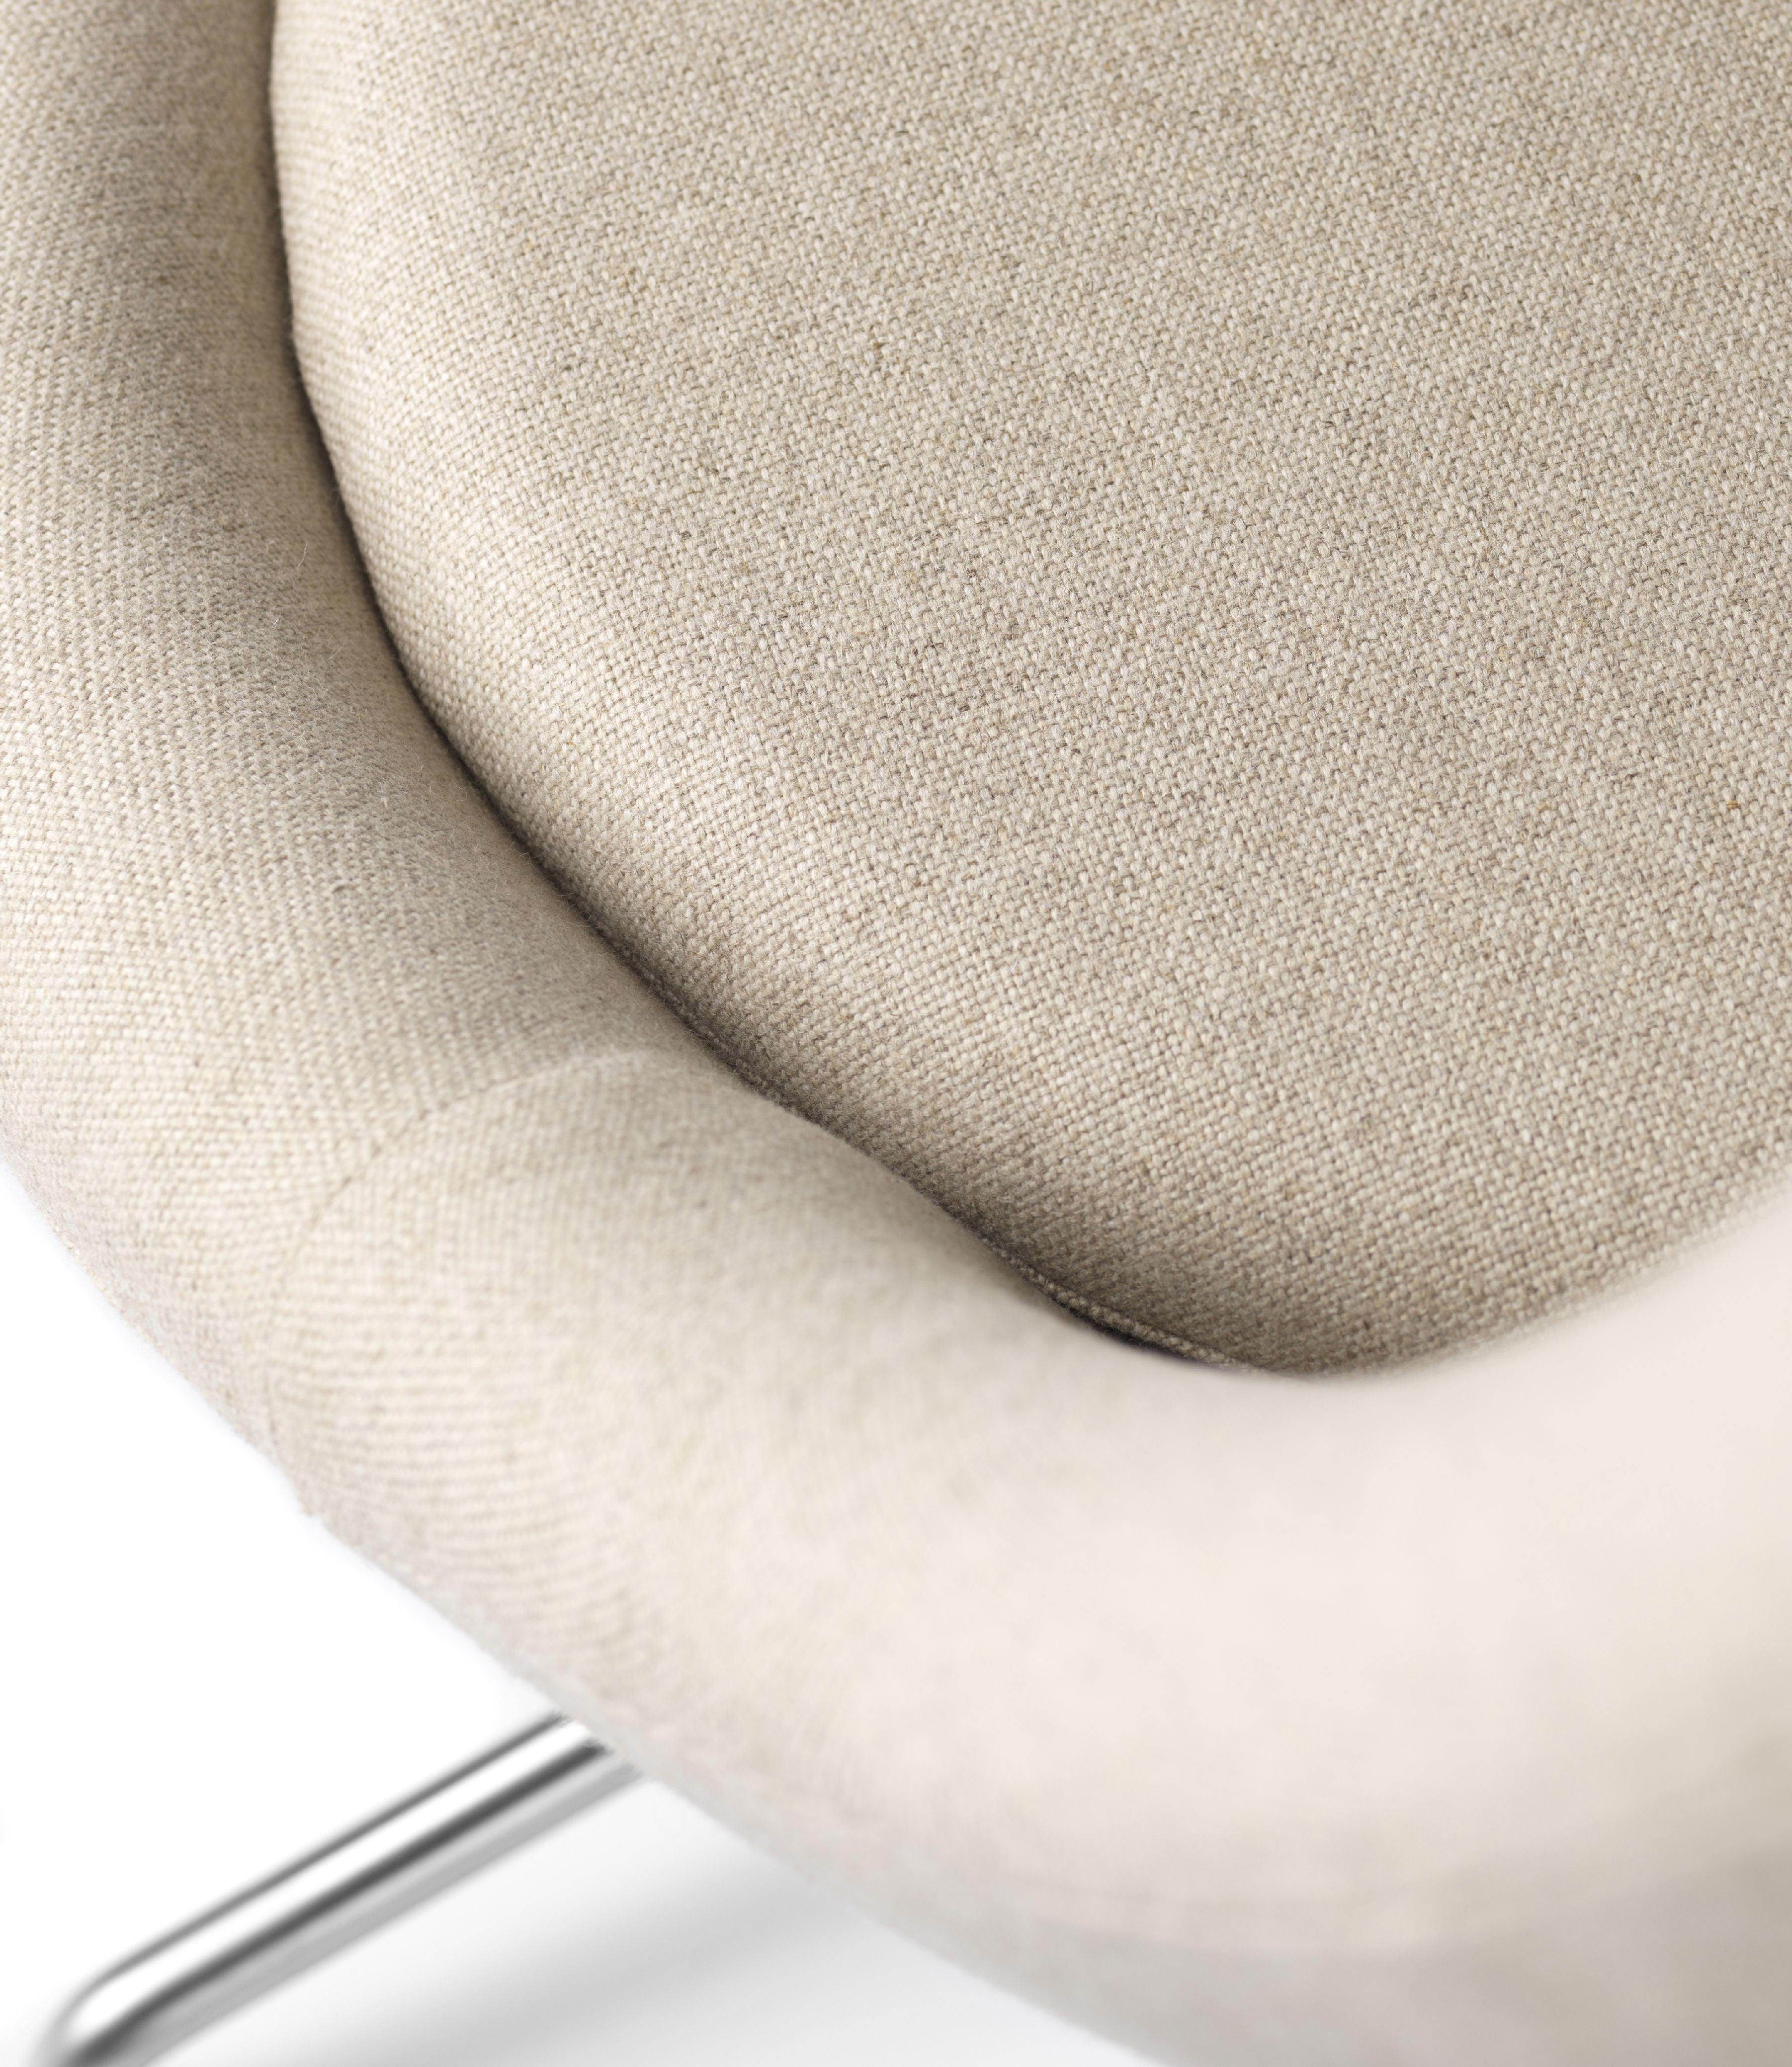 FDB Møbler L41 Bellamie Lounge -stol med svängbar ram, beige/metall